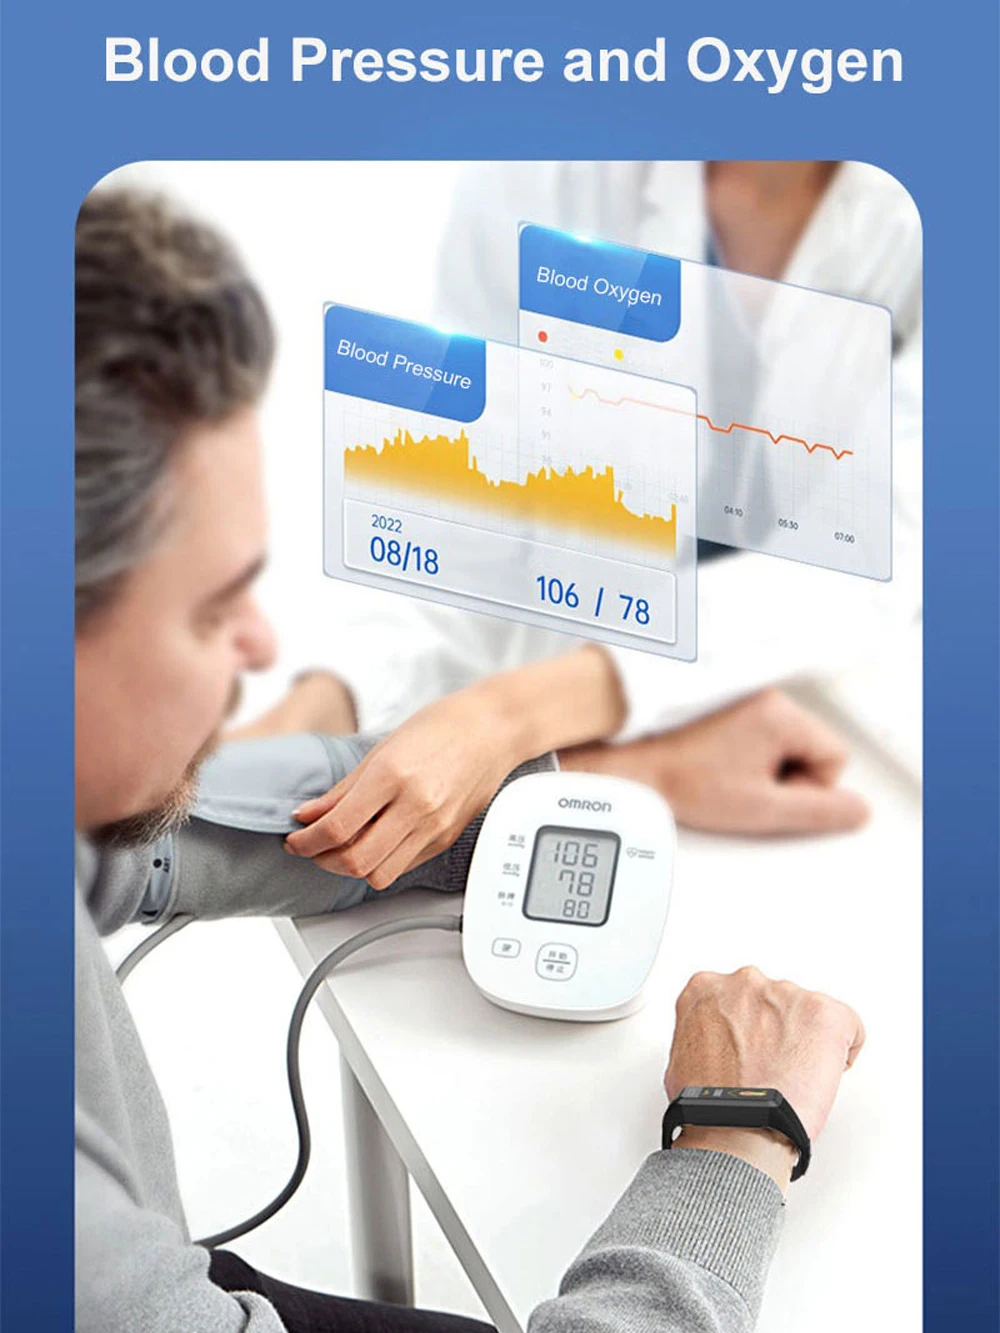 https://ae01.alicdn.com/kf/S105a51861fbe41aba48e89532da103b5I/Blood-Glucose-Watch-Monitor-ECG-PPG-Smart-Bracelet-Blood-Sugar-Pressure-Heart-Rate-Health-Smart-Band.jpg